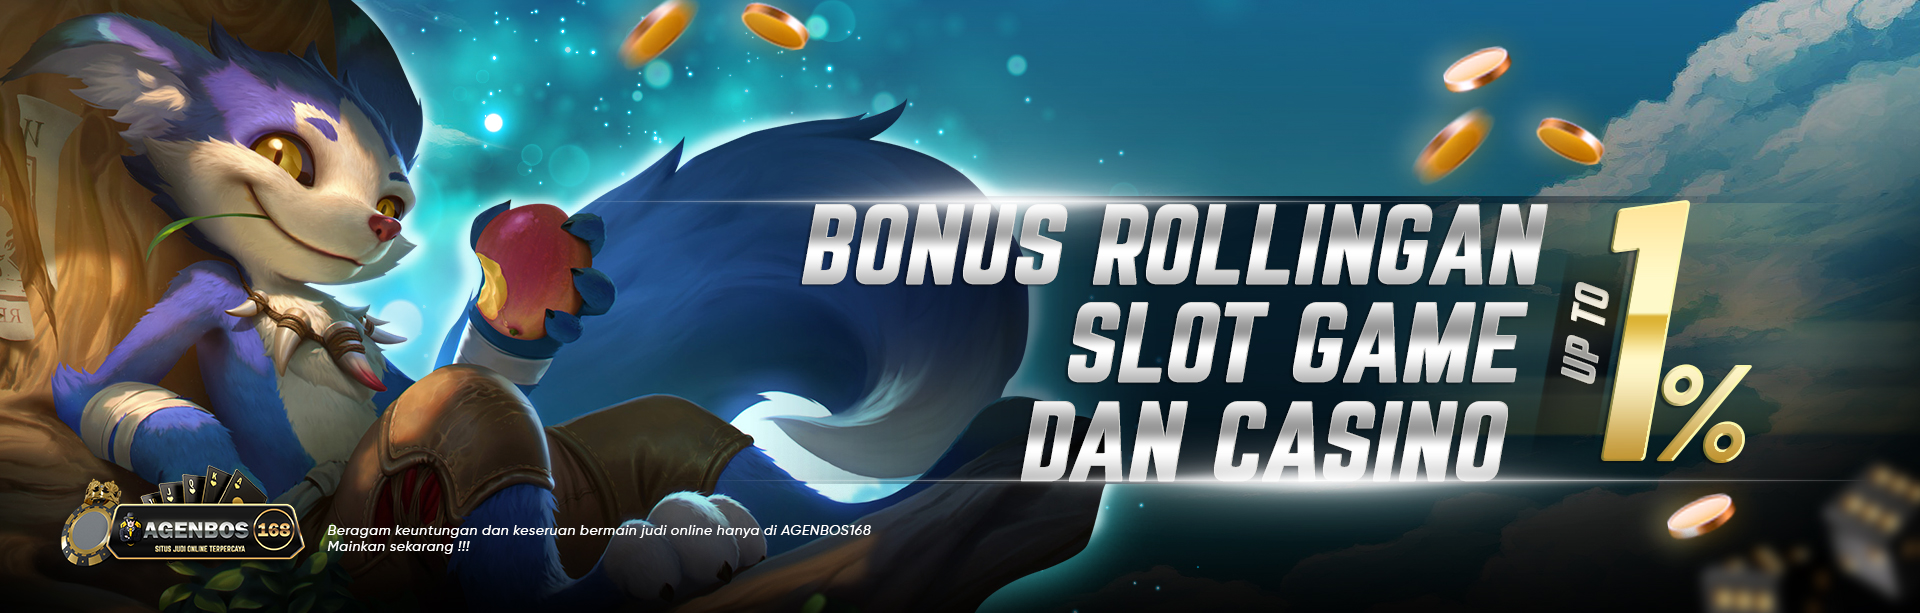 bonus rollingan slot dan casino 1%